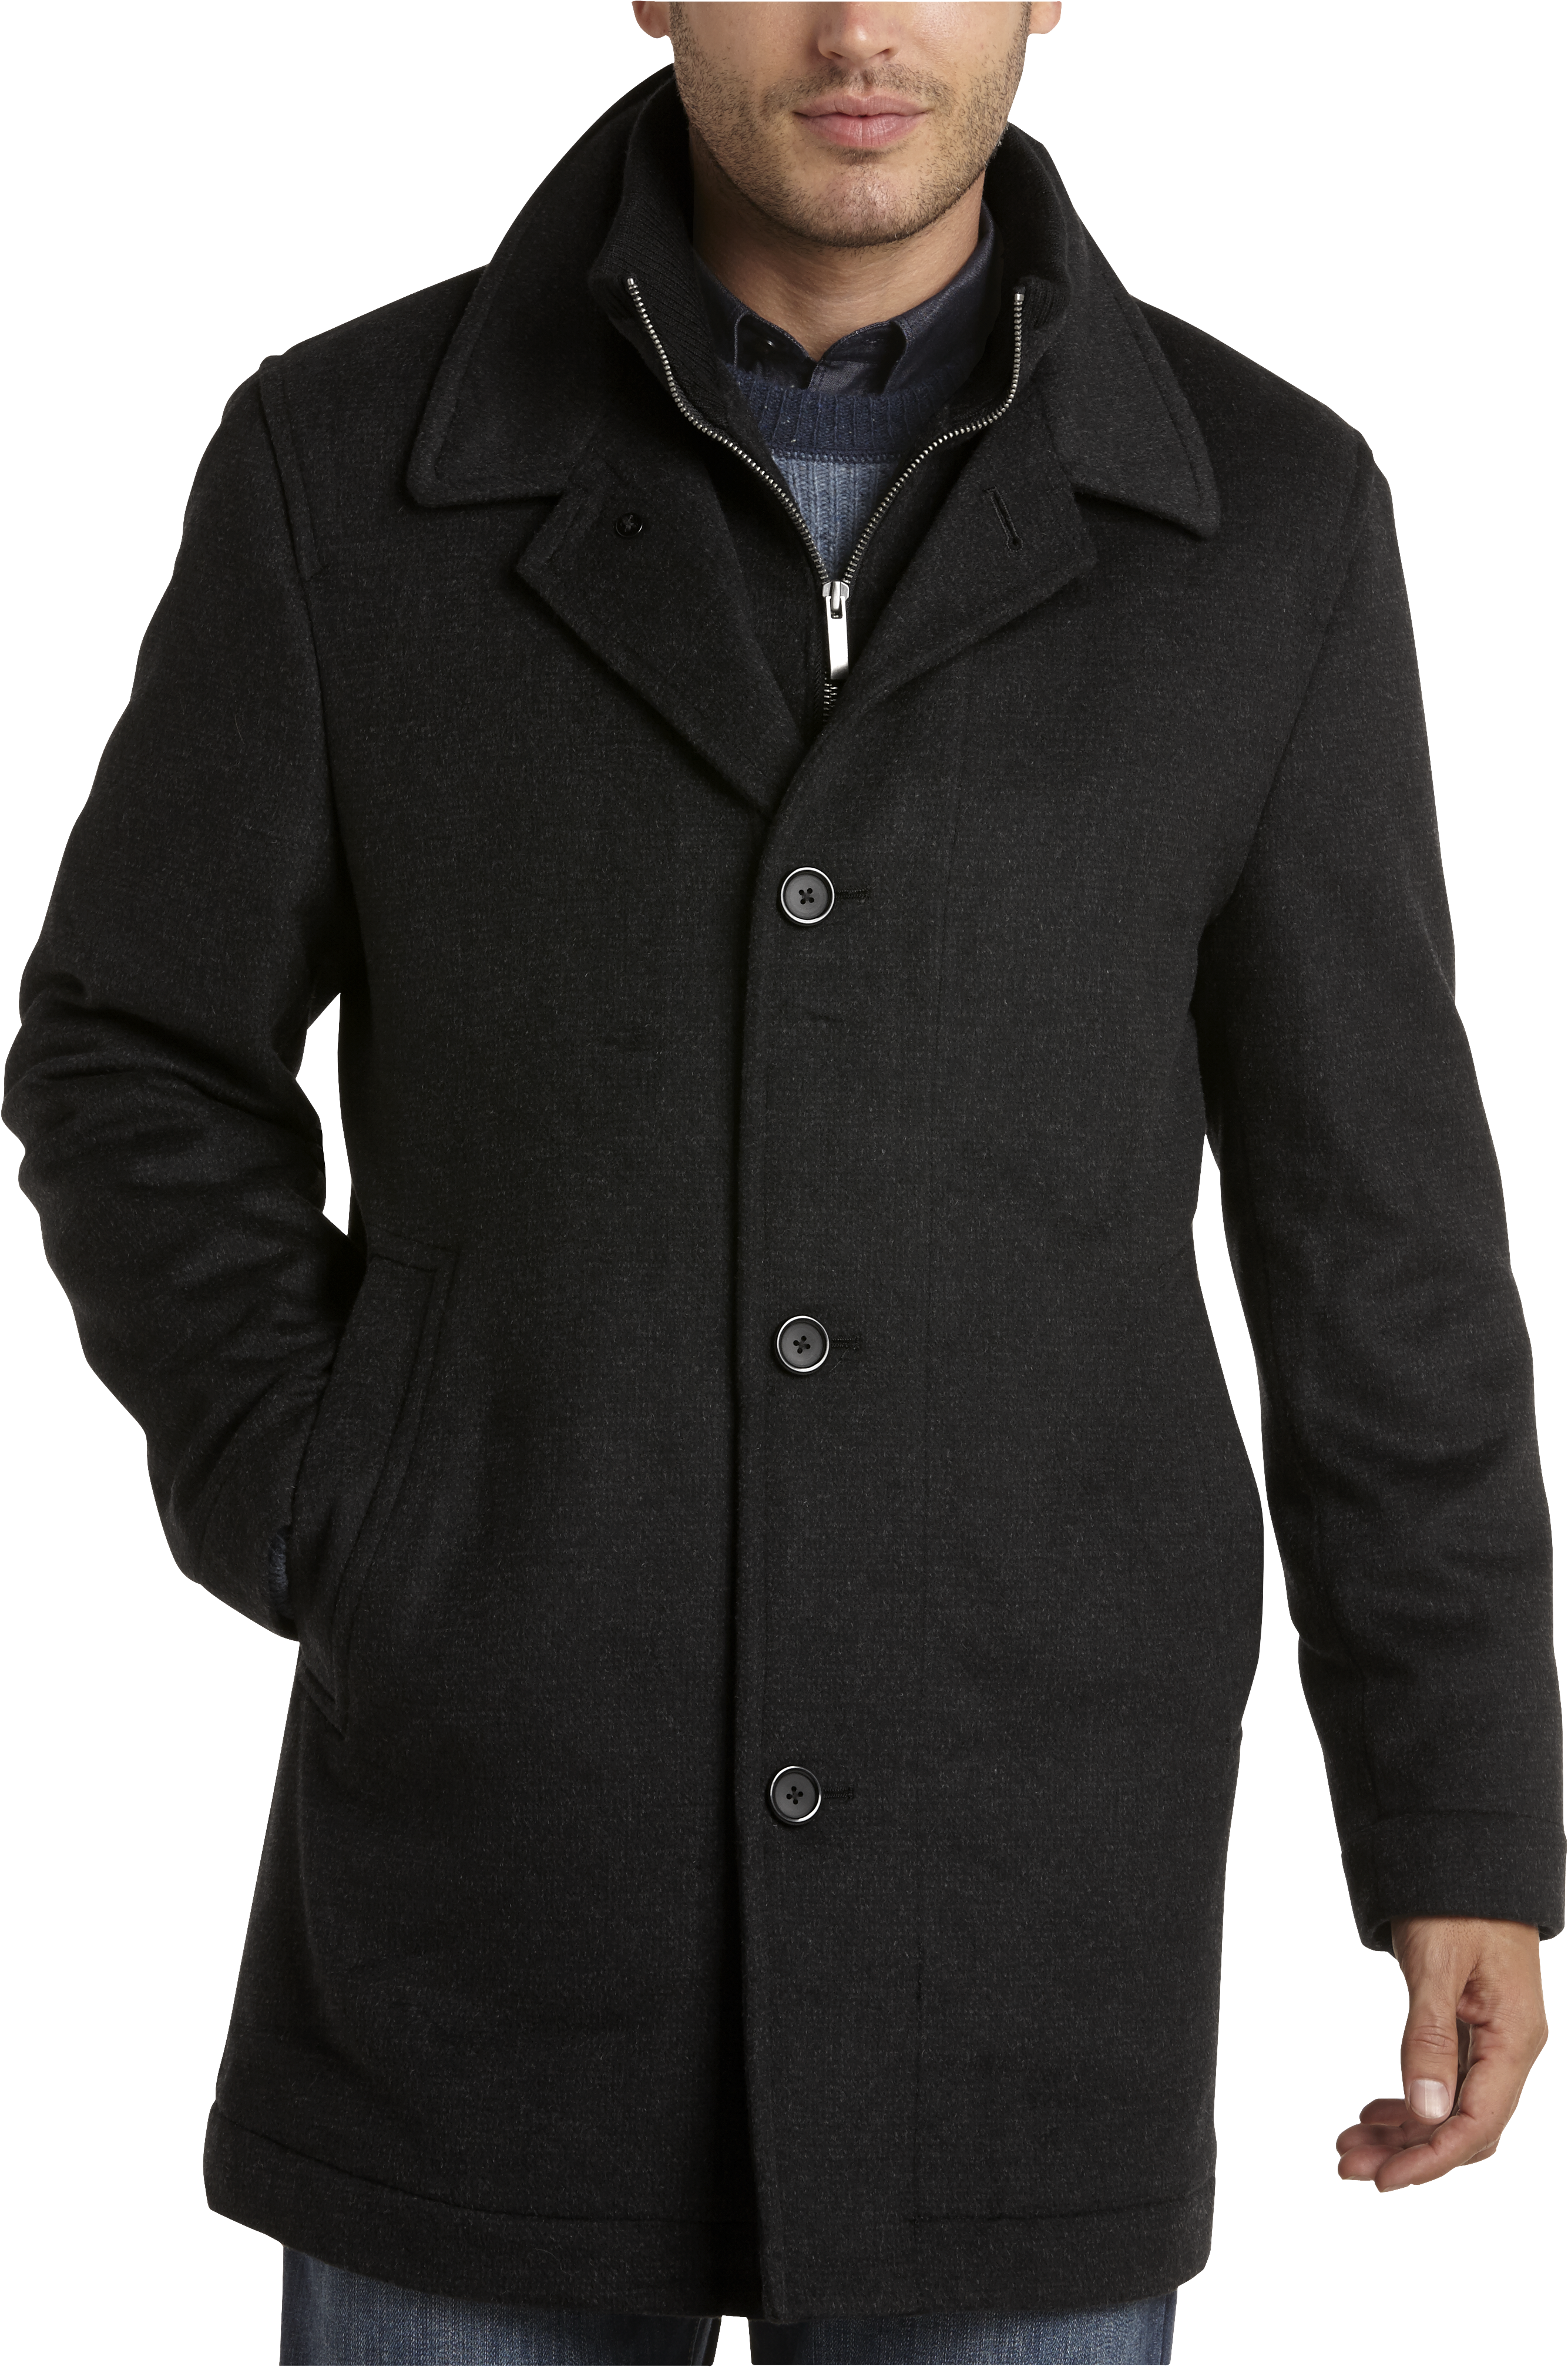 Pronto Uomo Black Tic Wool Classic Fit Bib Coat - Men's Topcoats | Men ...